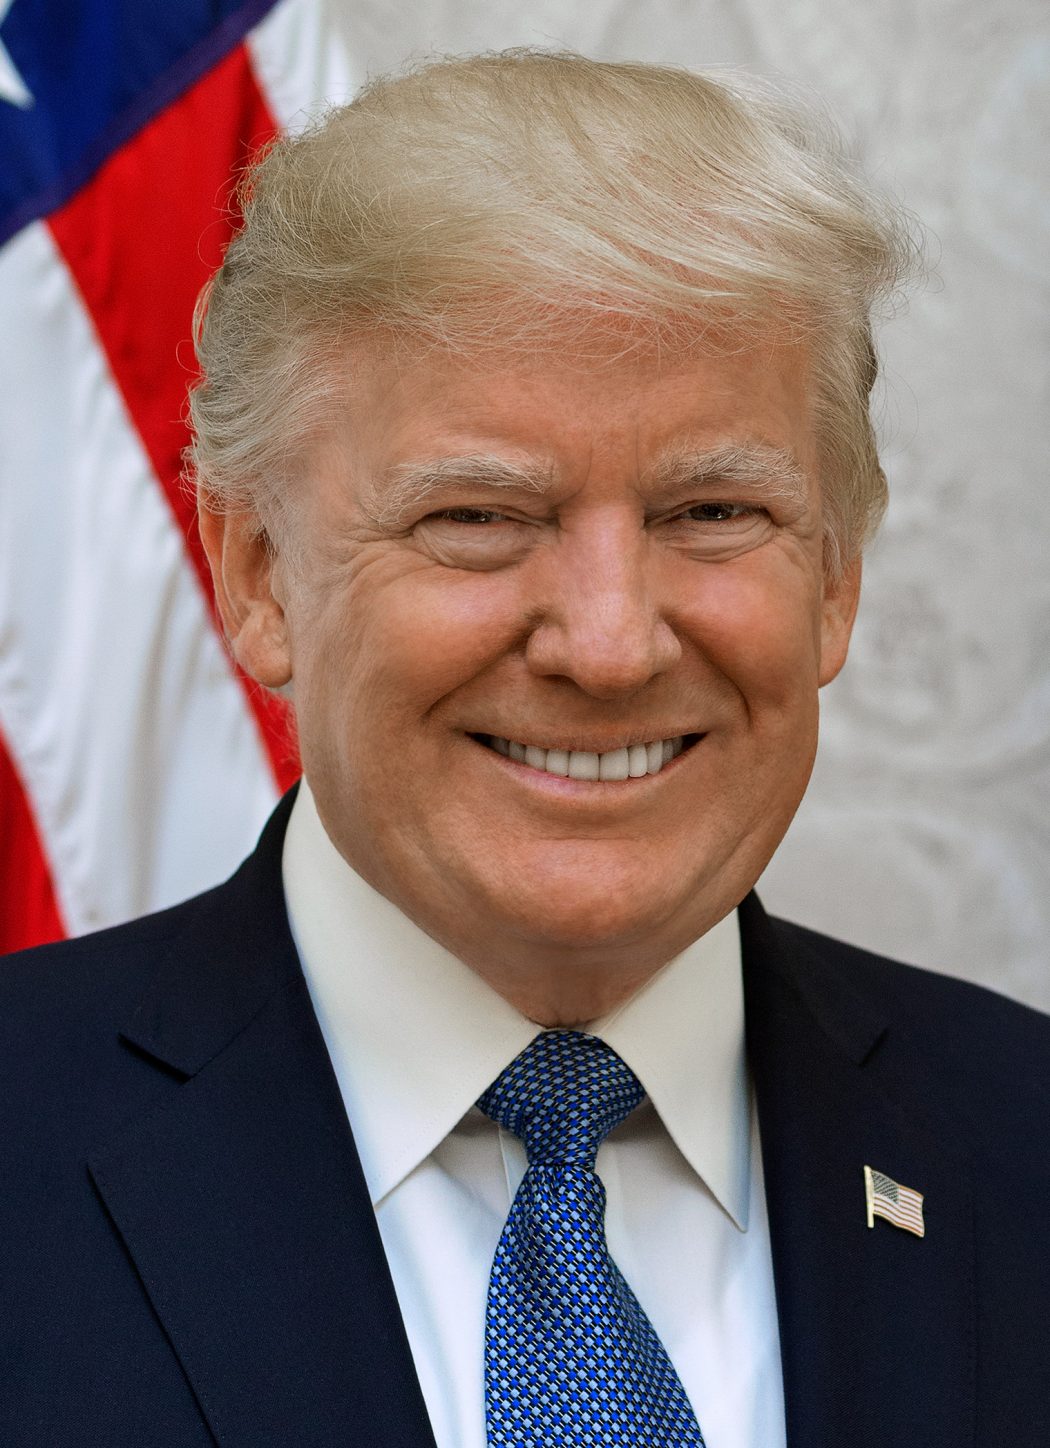 Donald_Trump_official_portrait_(cropped)